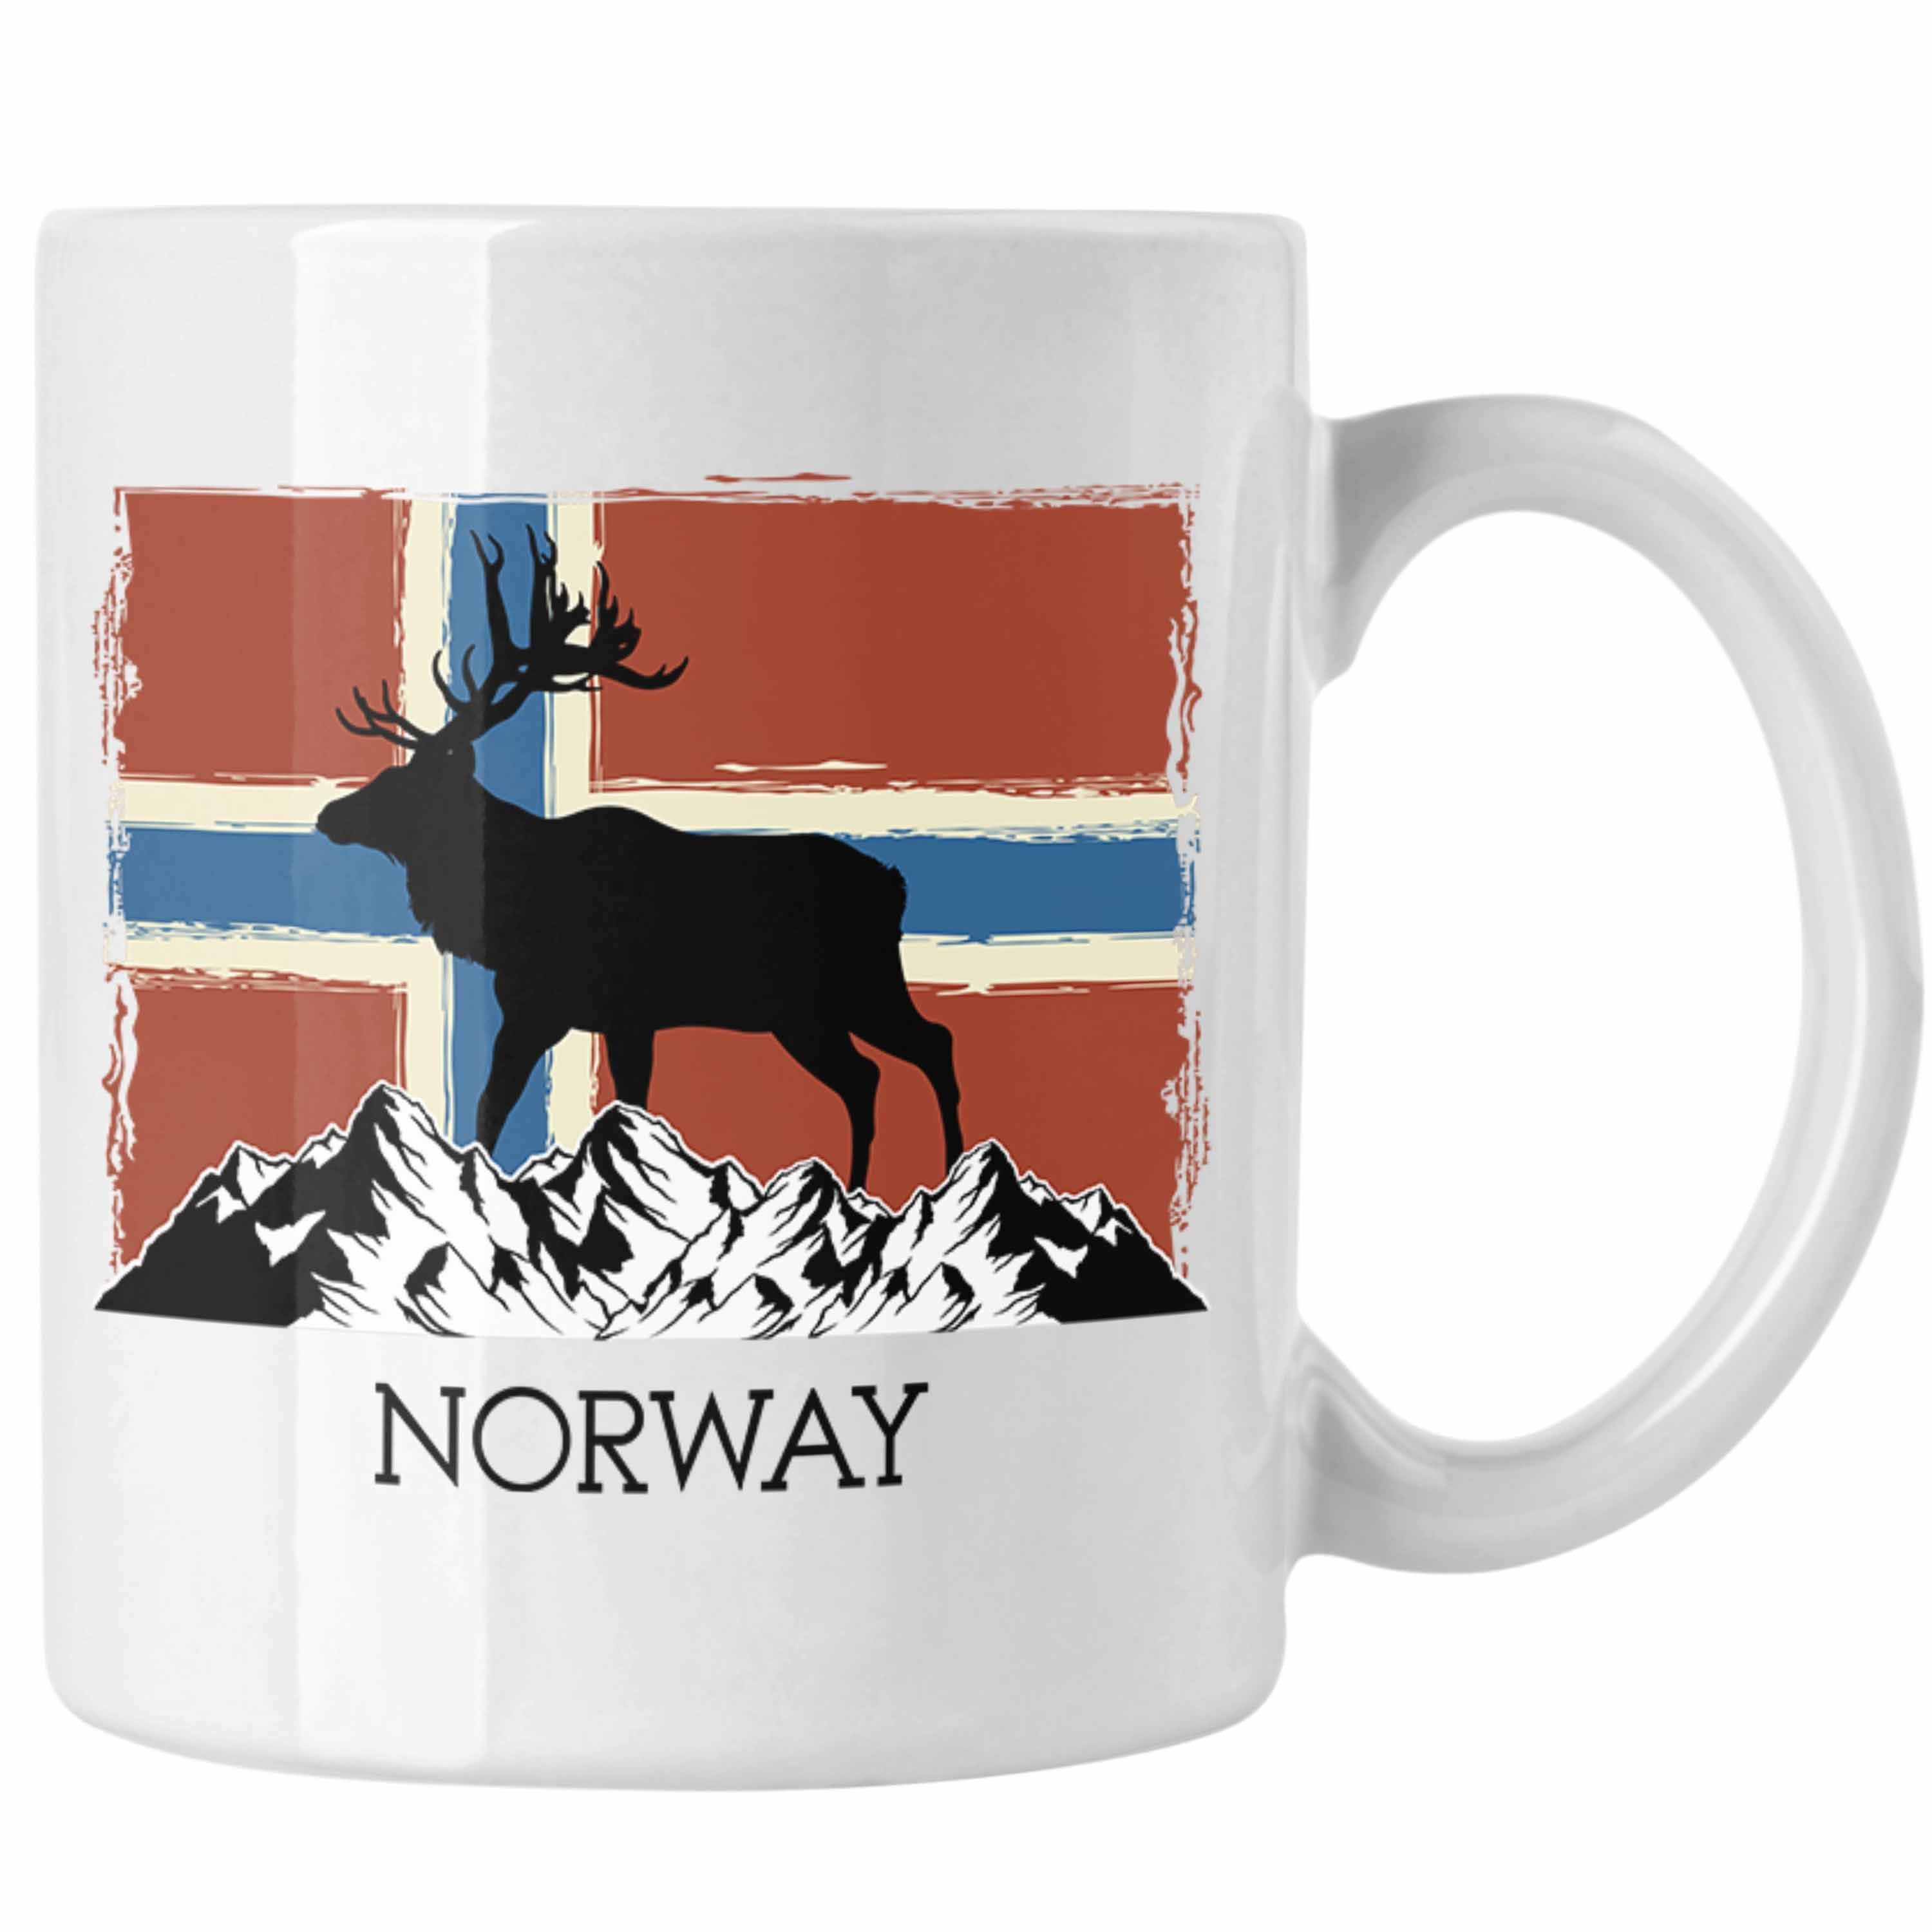 Trendation Tasse Trendation - Norwegen Geschenke Tasse Flagge Nordkap Elch Norway Weiss